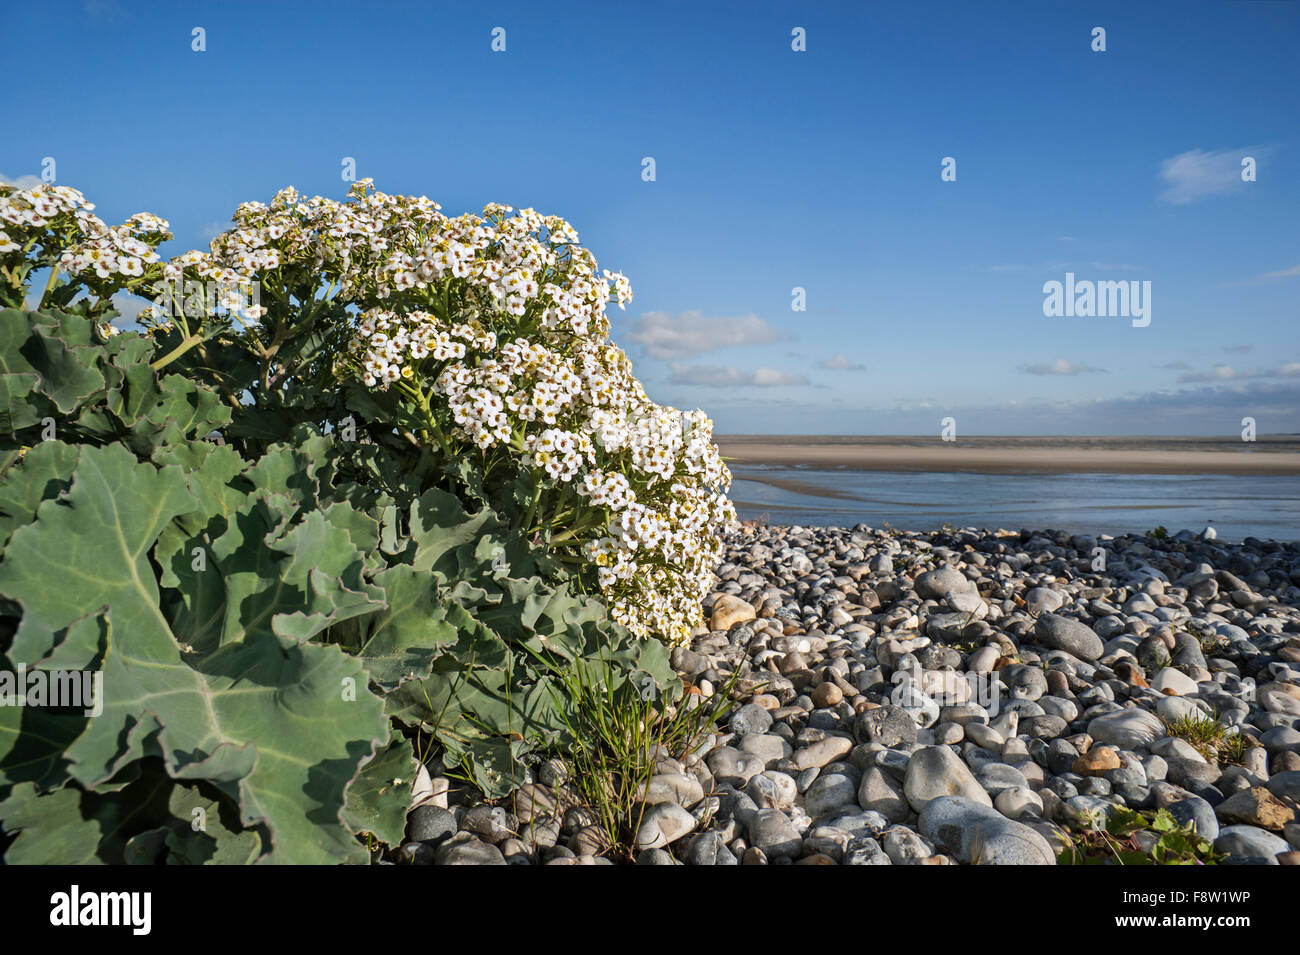 Sea kale / seakale / crambe (Crambe maritima) in flower on pebble beach along the North Sea coast, Bay of the Somme, France Stock Photo